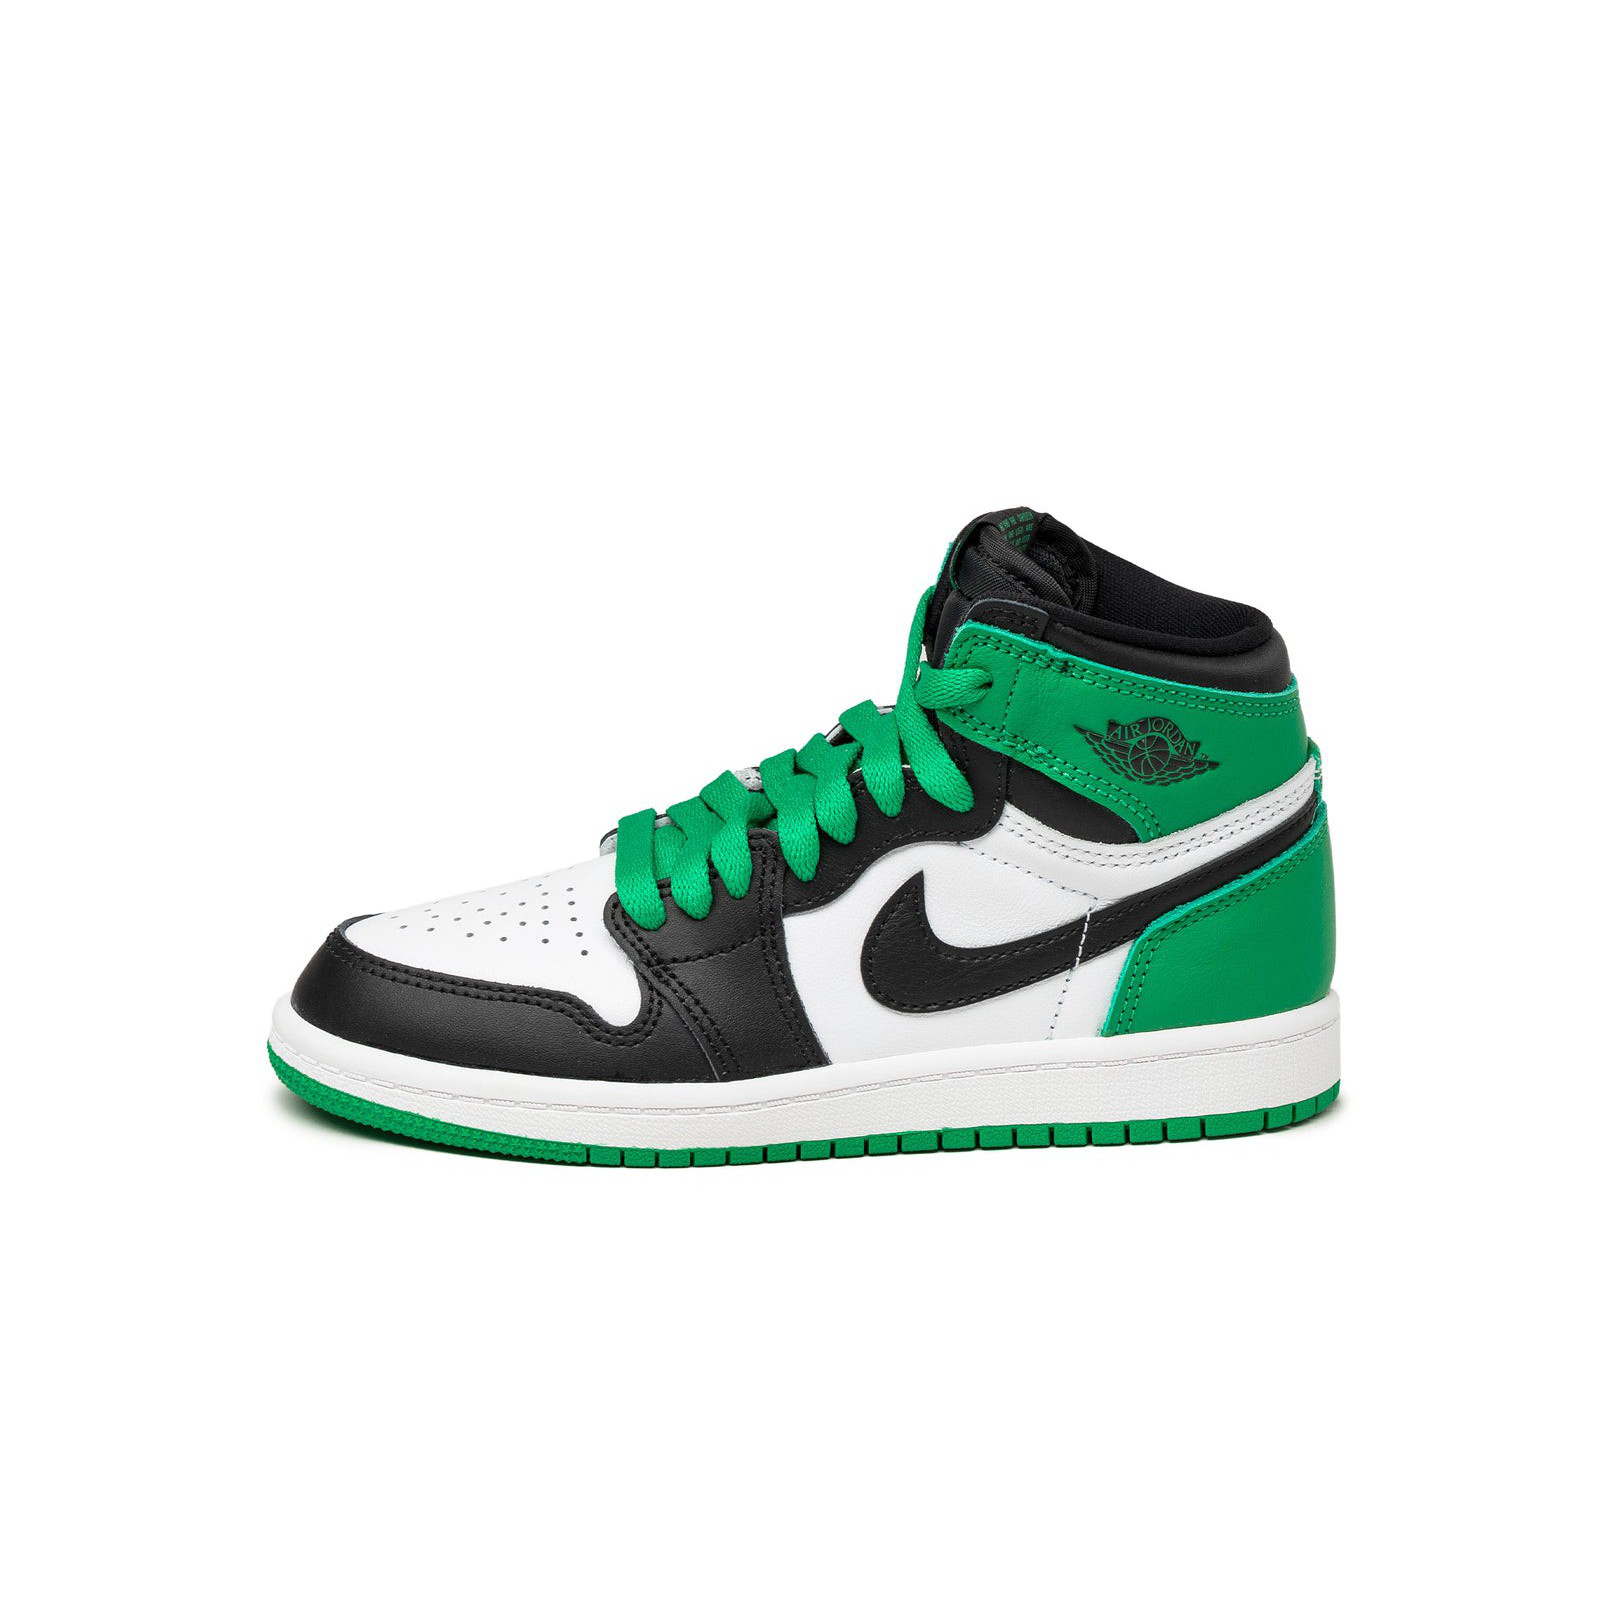 Air Jordan 1 Mid (PS)
« Lucky Green »